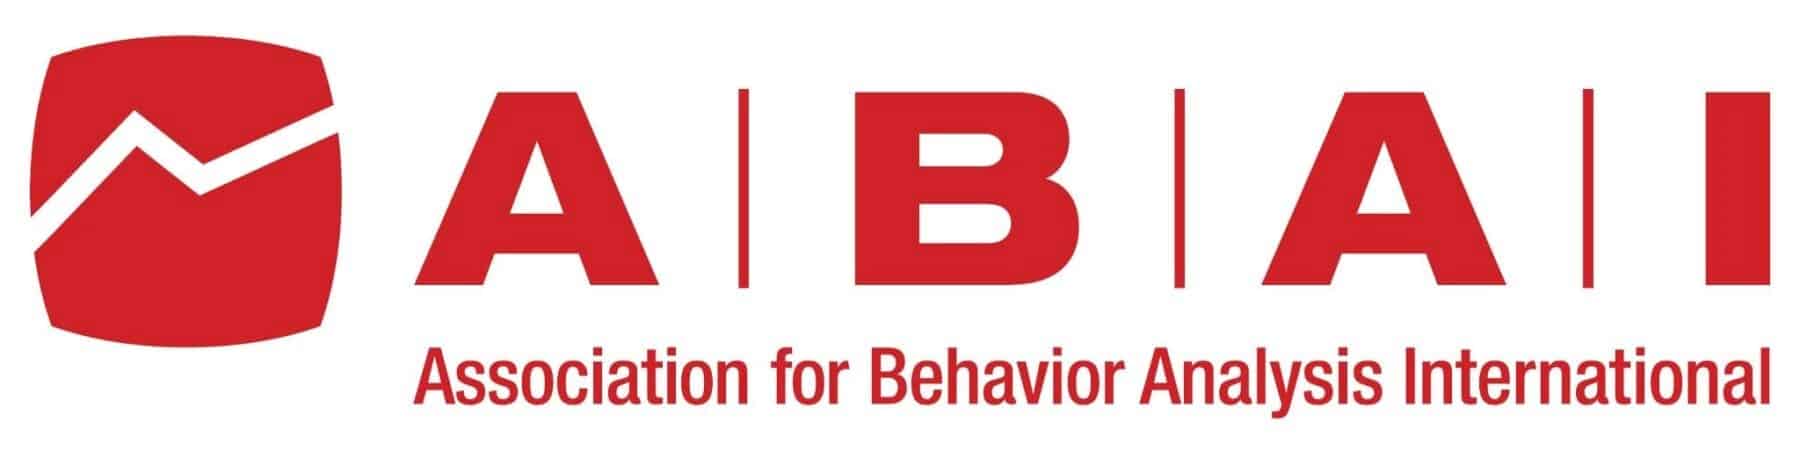 Association For Behavioral Analysis International